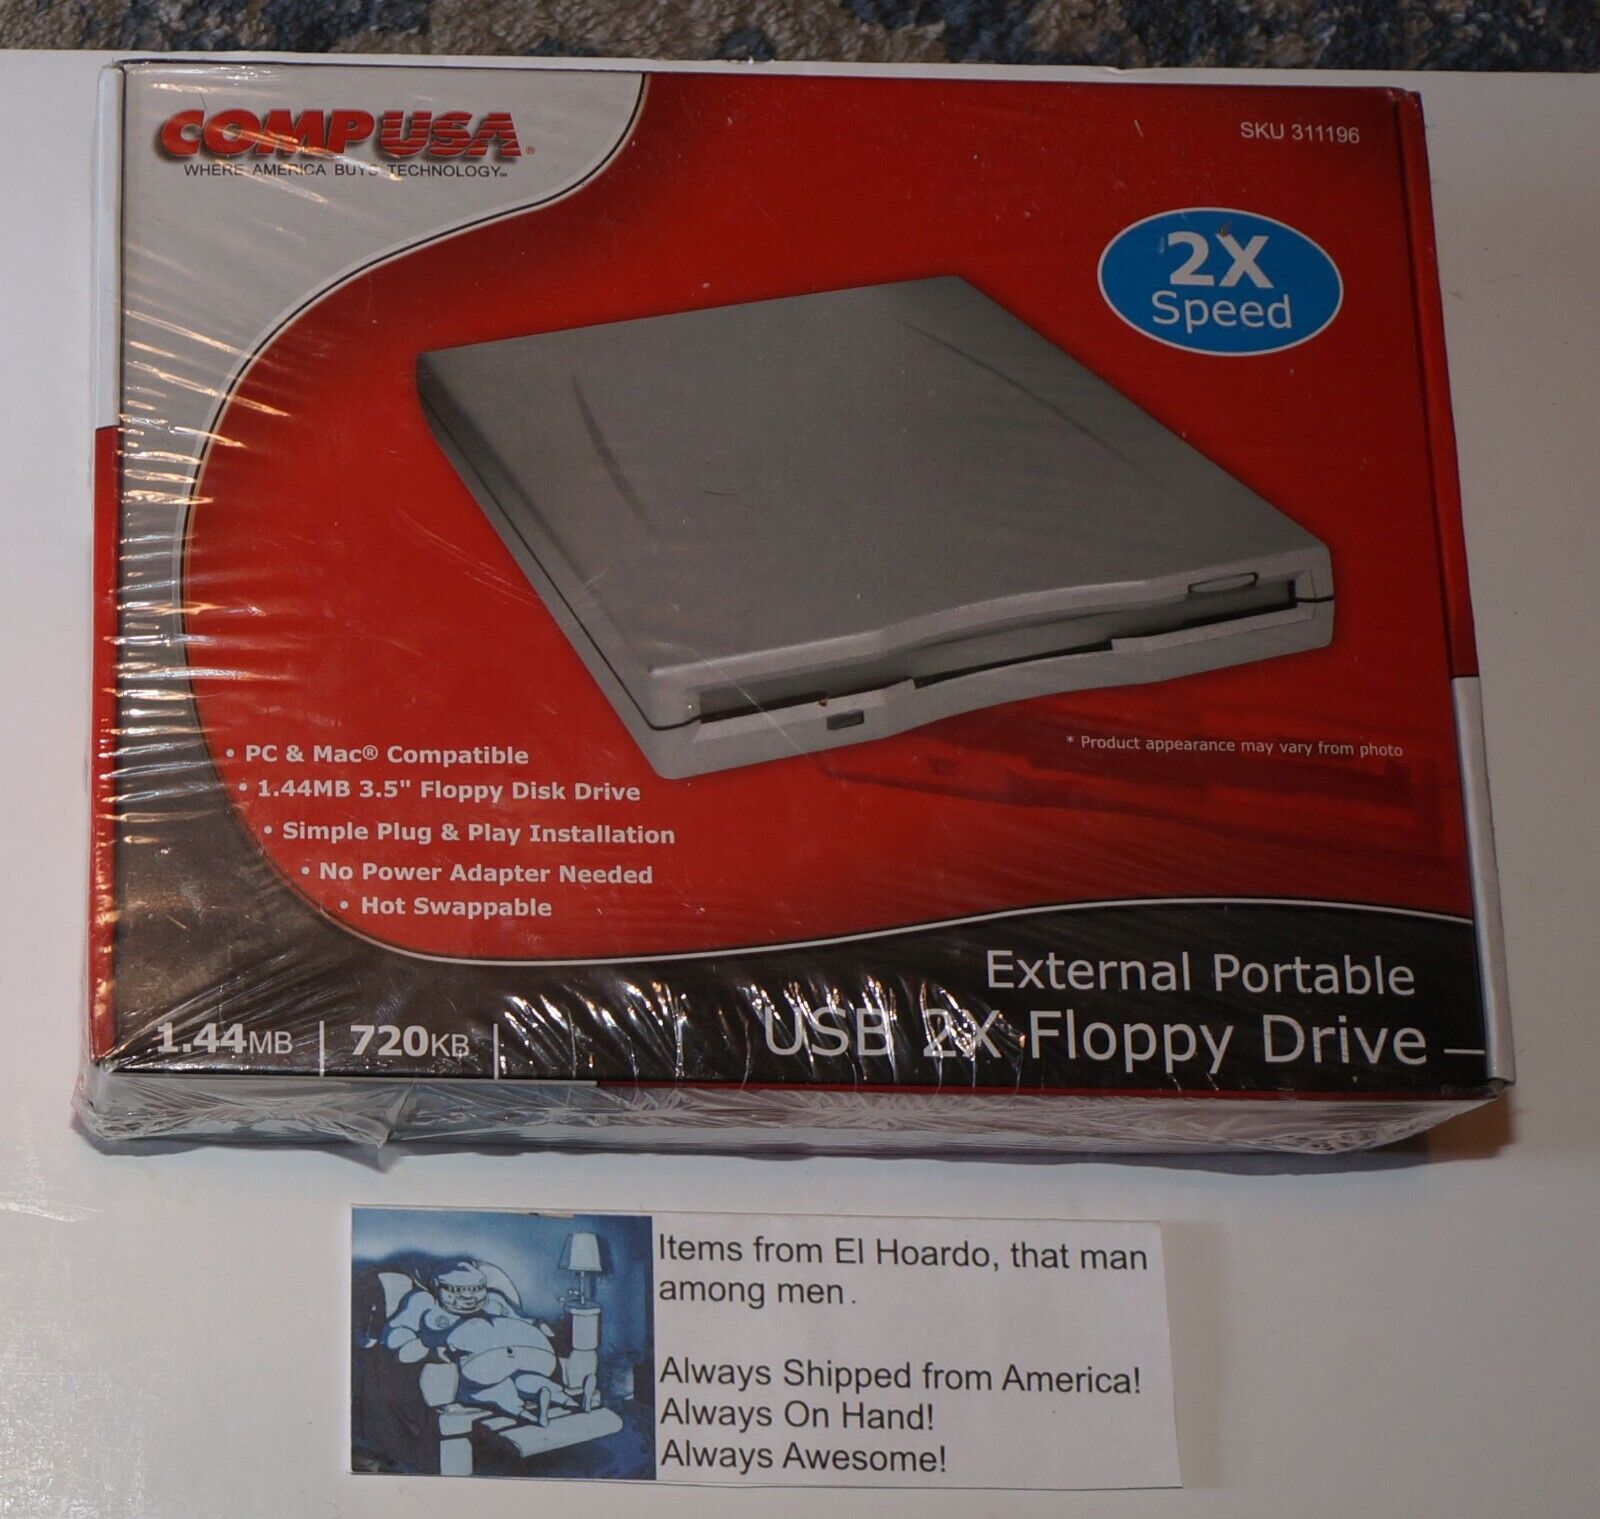 Comp USA External Portable USB 2X Floppy Drive Comp USA New SEALED SKU 311196